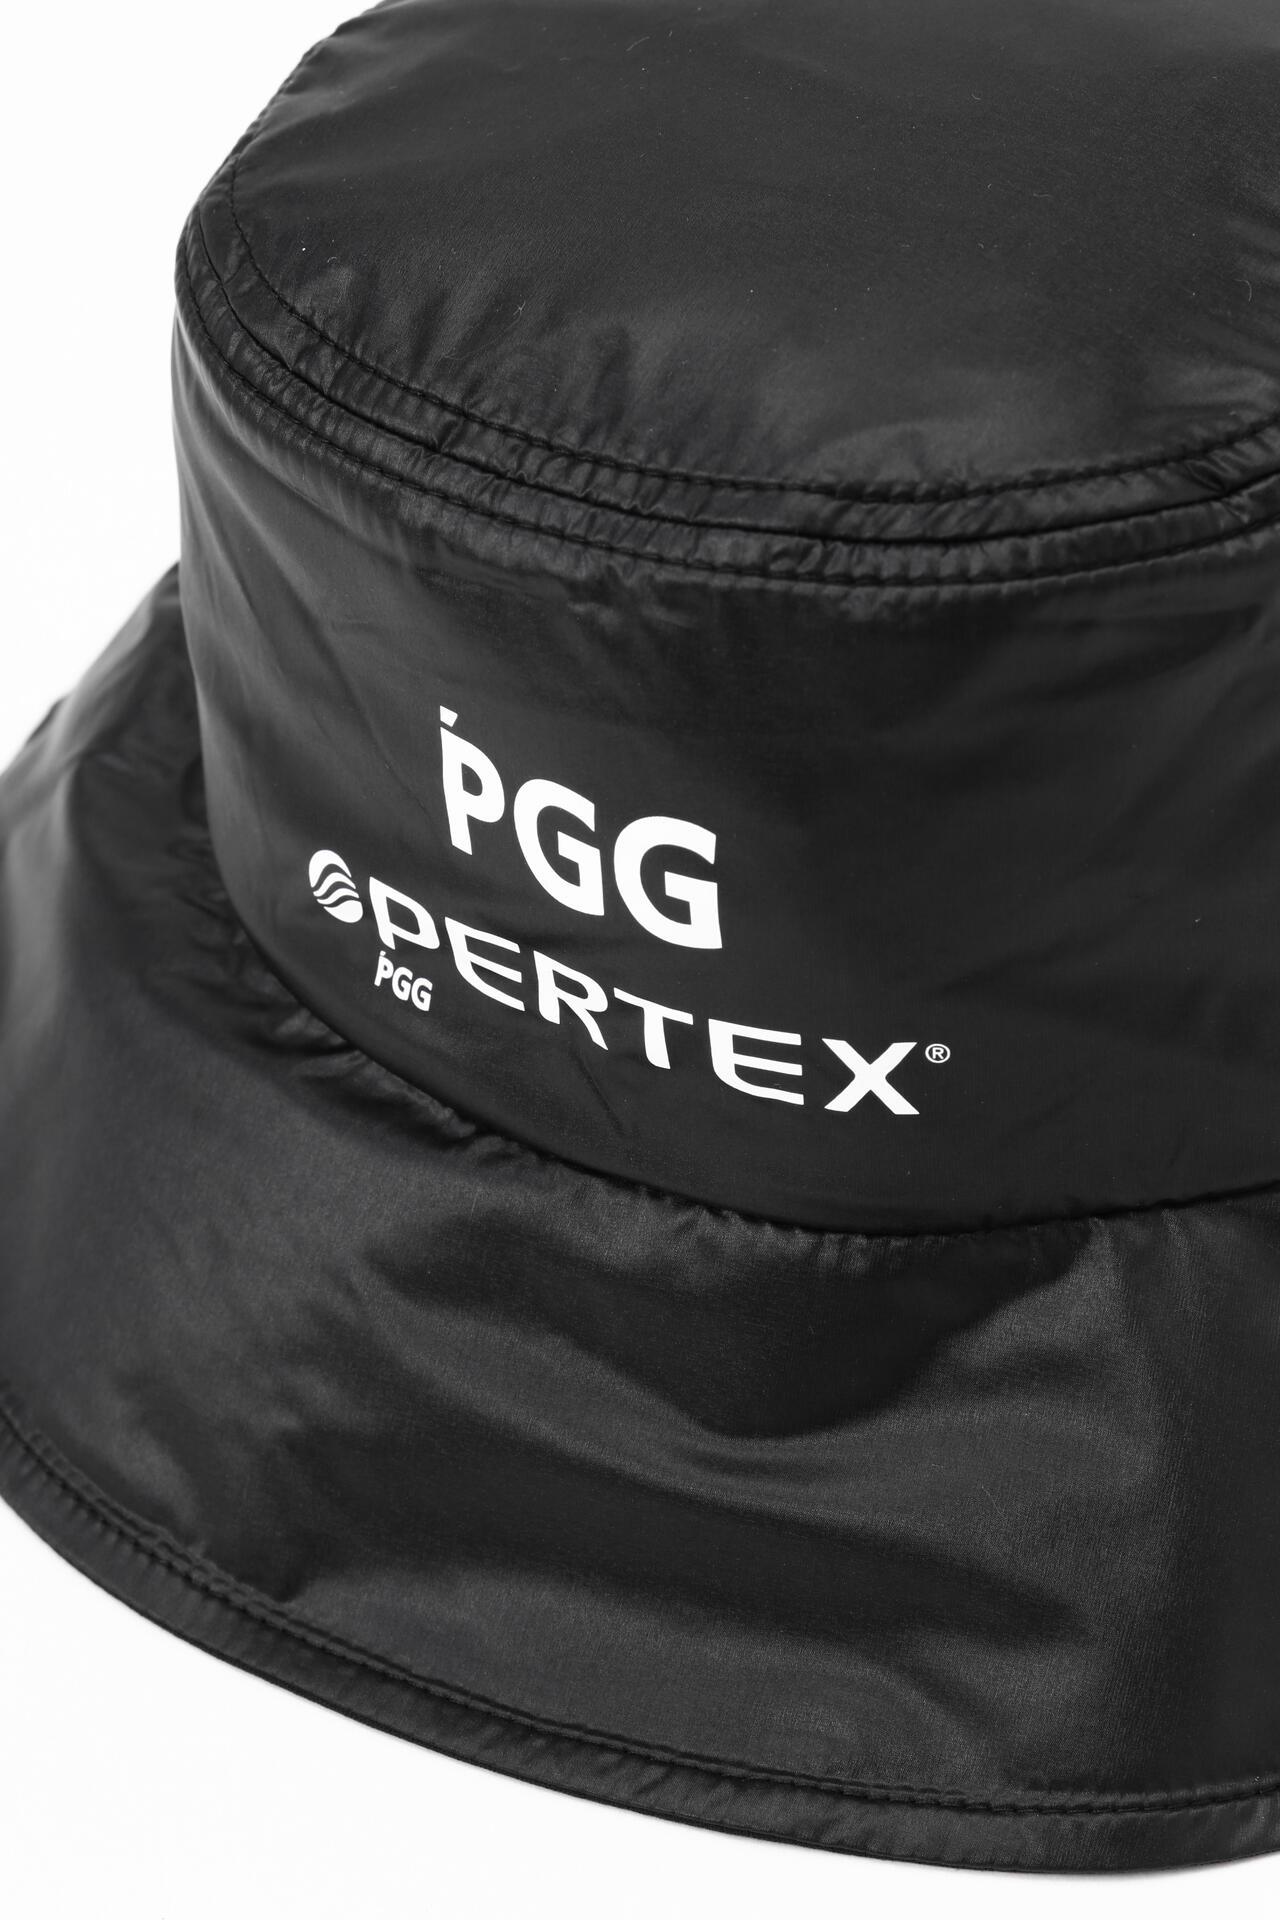 【PGG】PERTEX二層ハット (UNISEX)